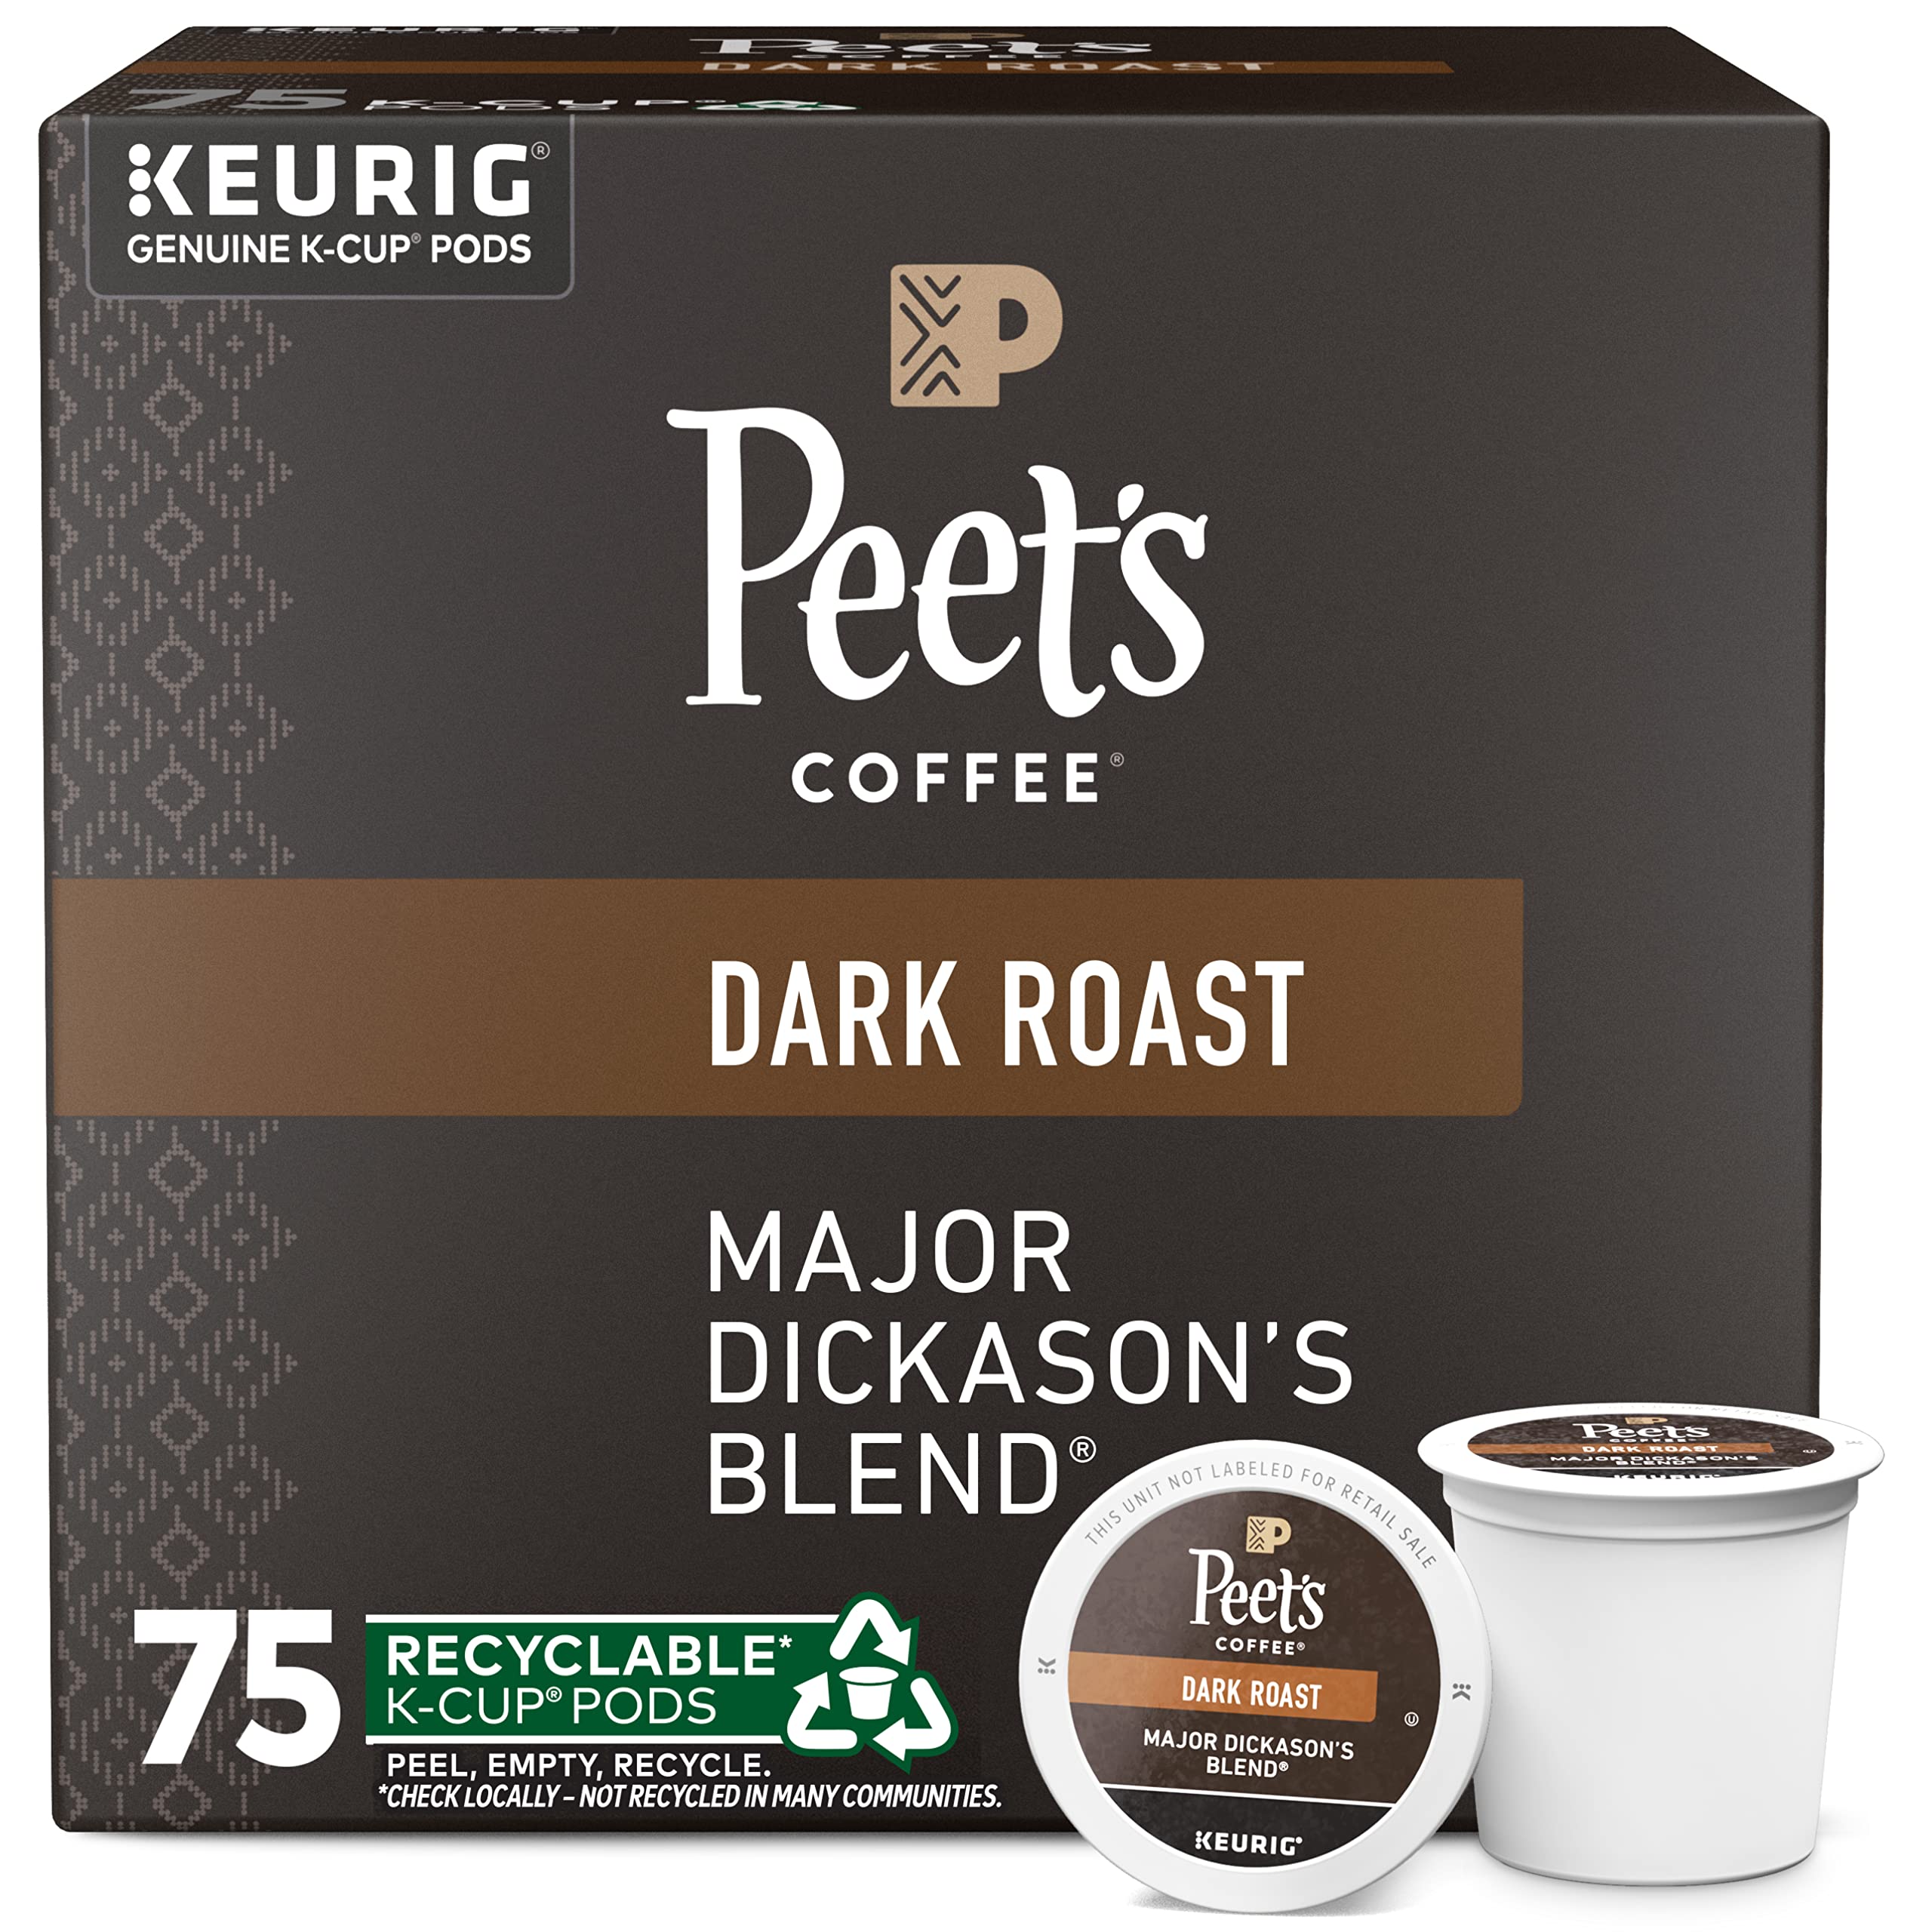 75-Count Peet's Coffee Major Dickason's Blend K-Cup Coffee Pods (Dark Roast) Subscribe & Save $31.64